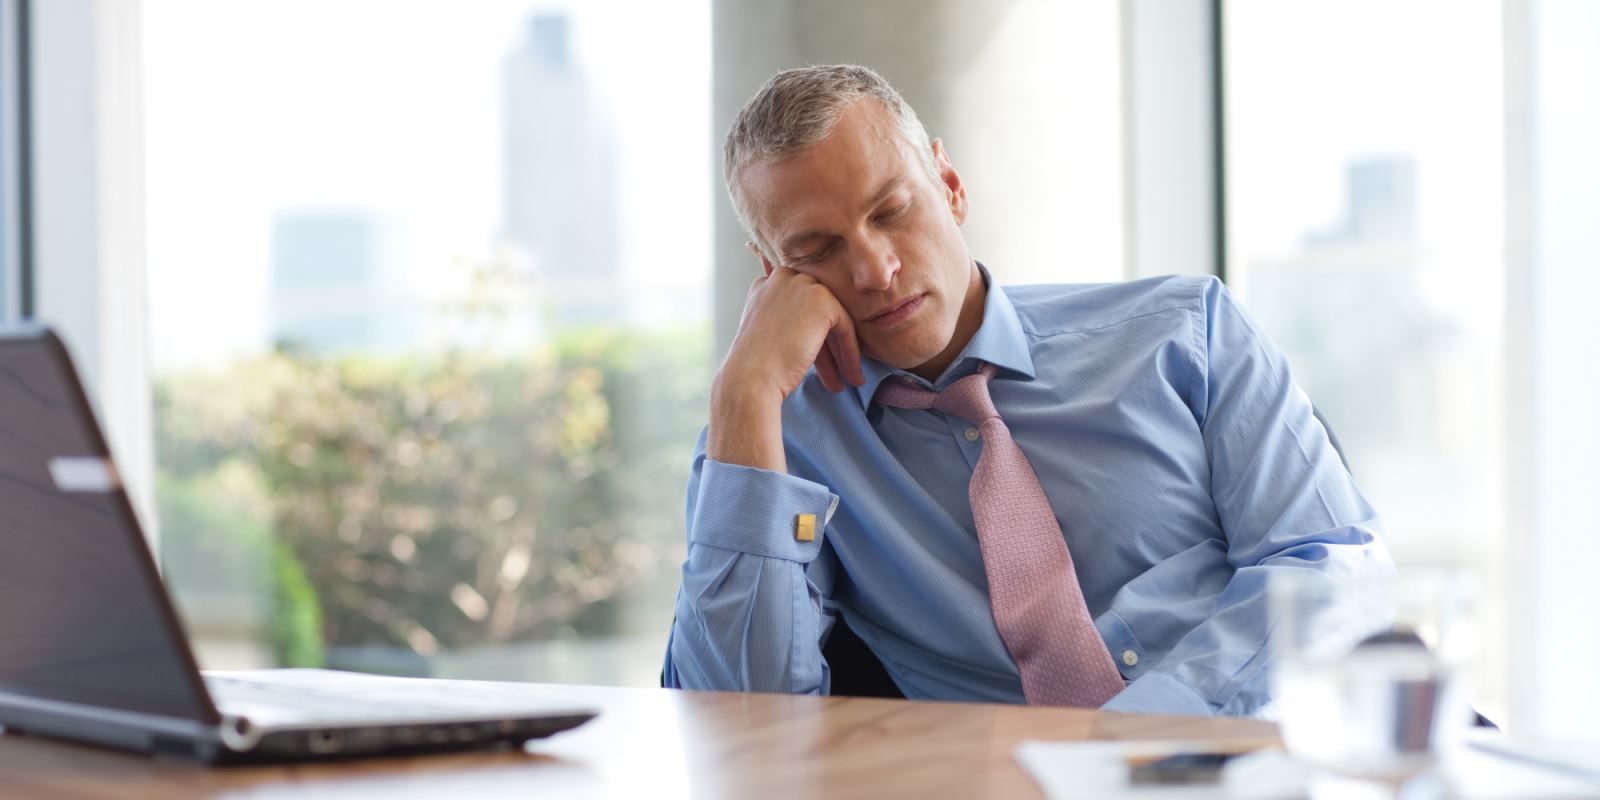 Man in business attire falling asleep at a desk